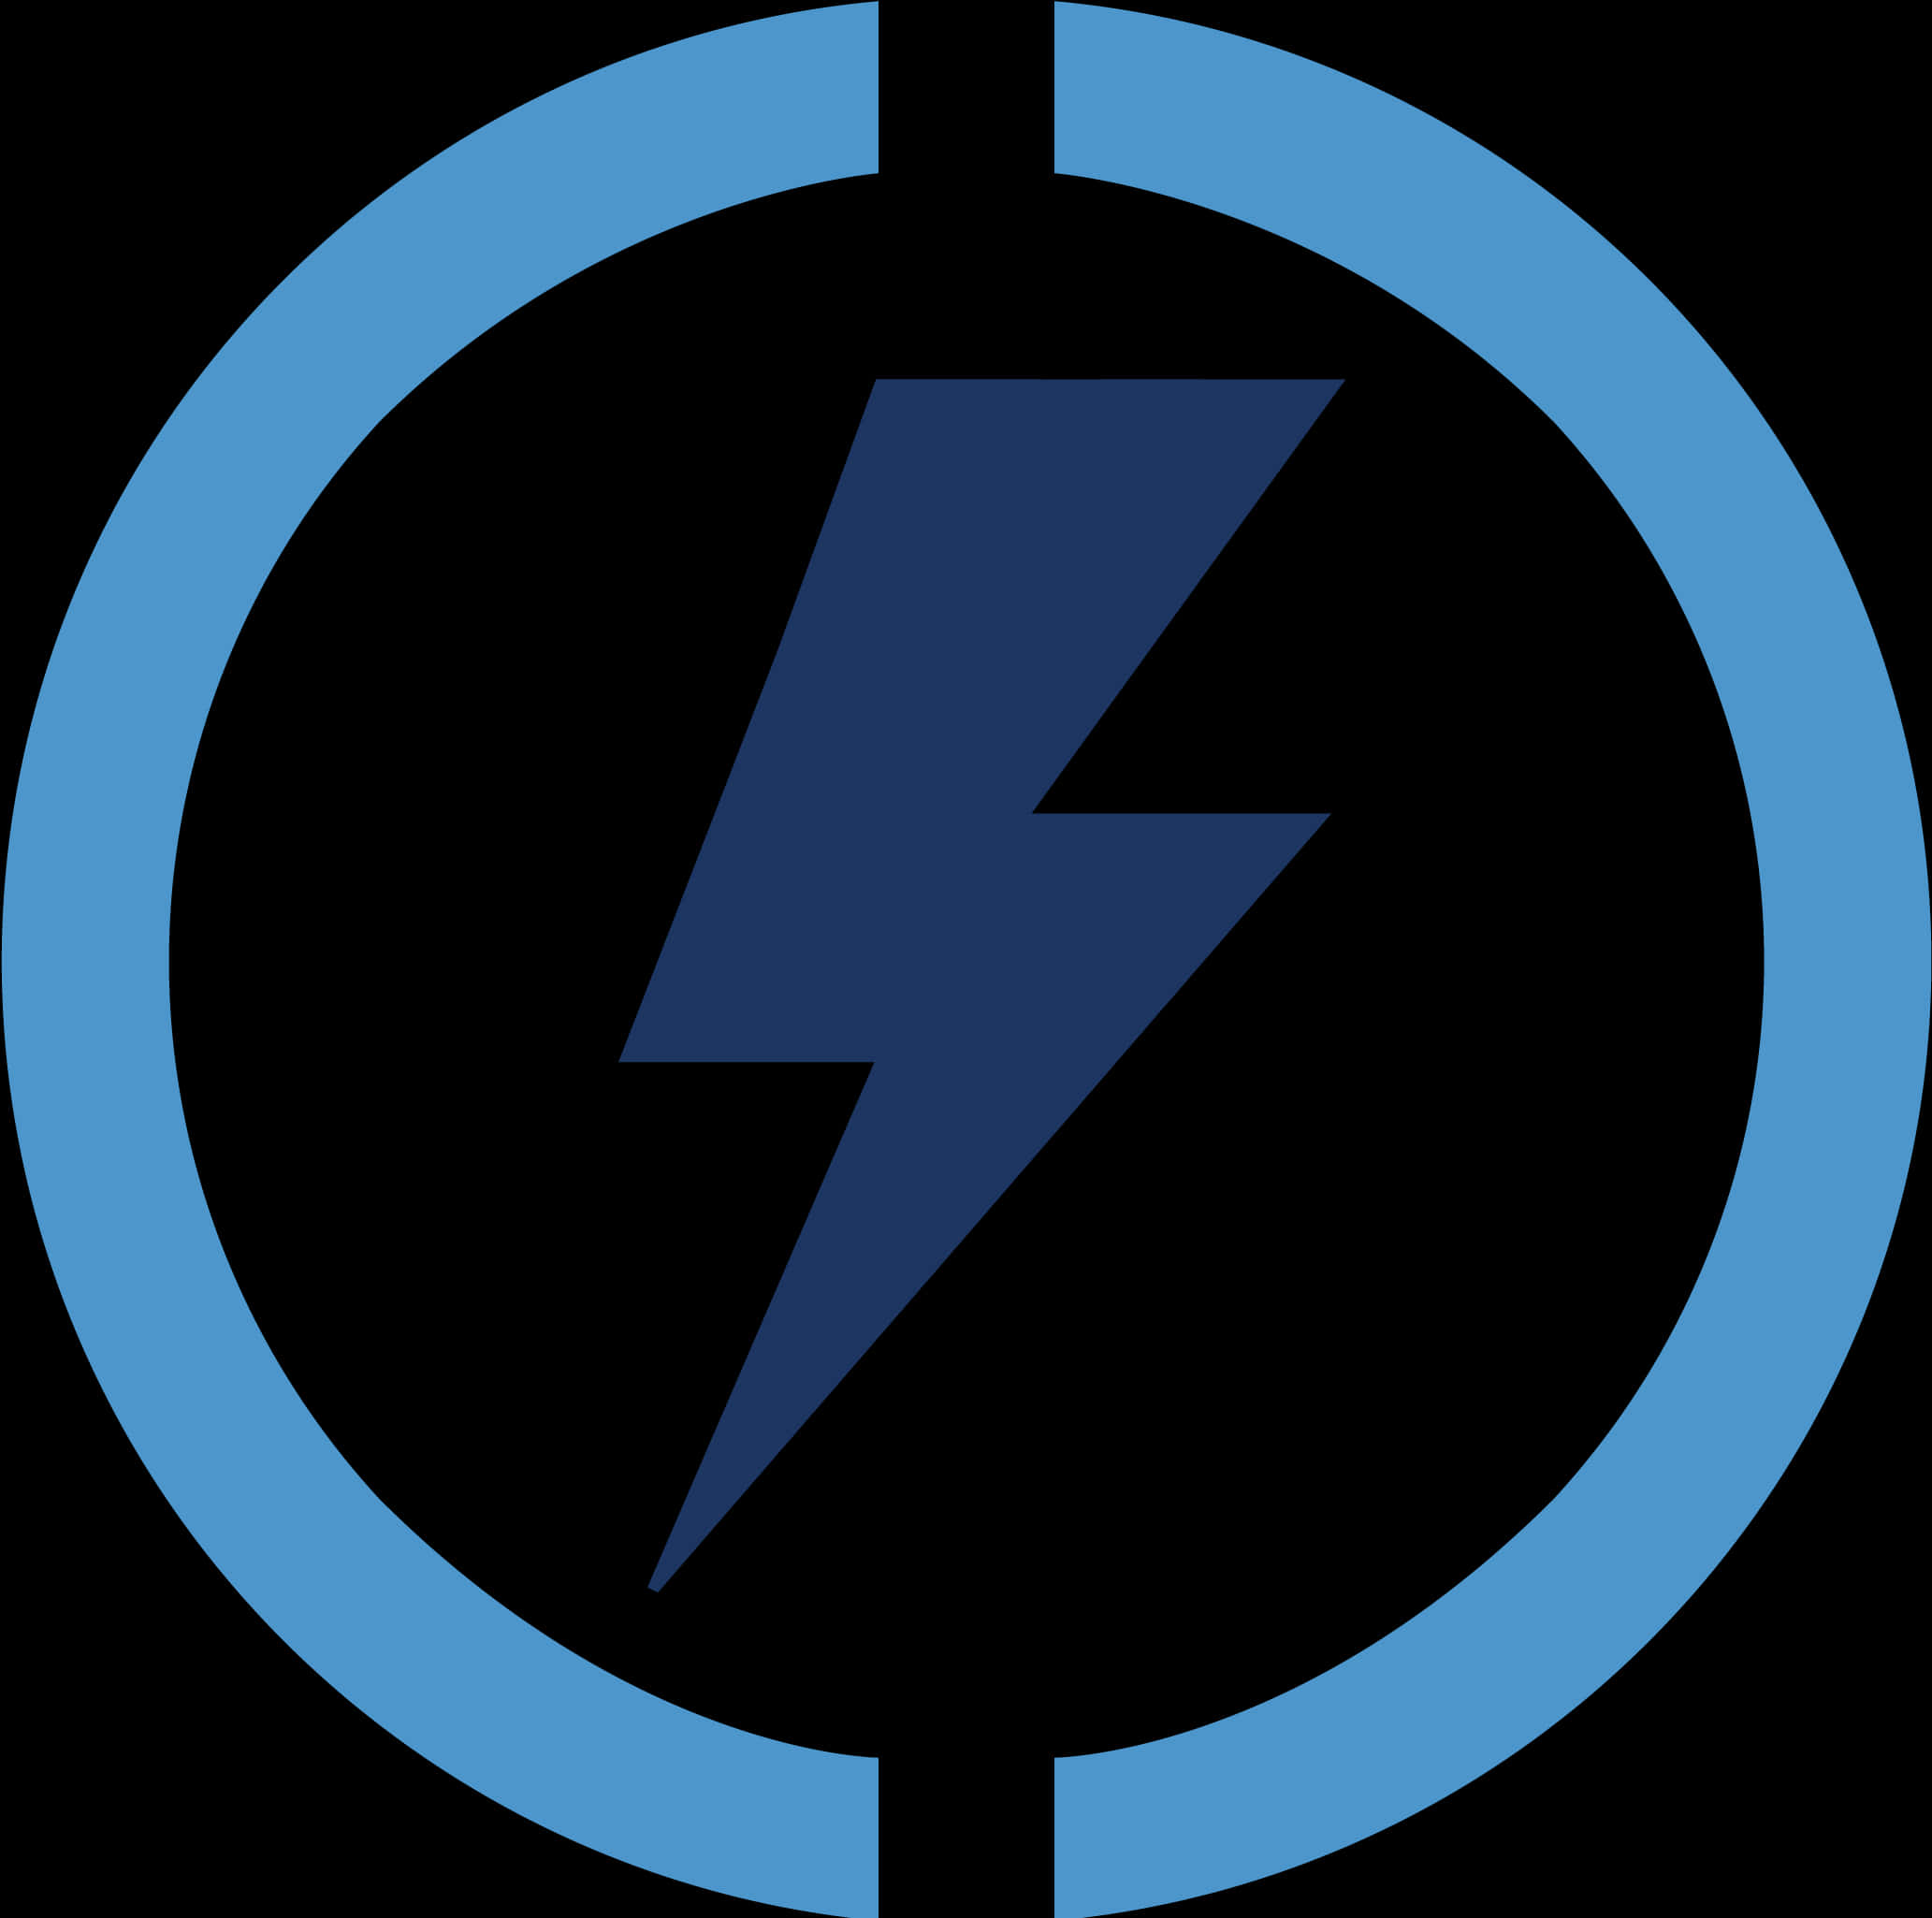 A Blue Lightning Bolt In A Circle